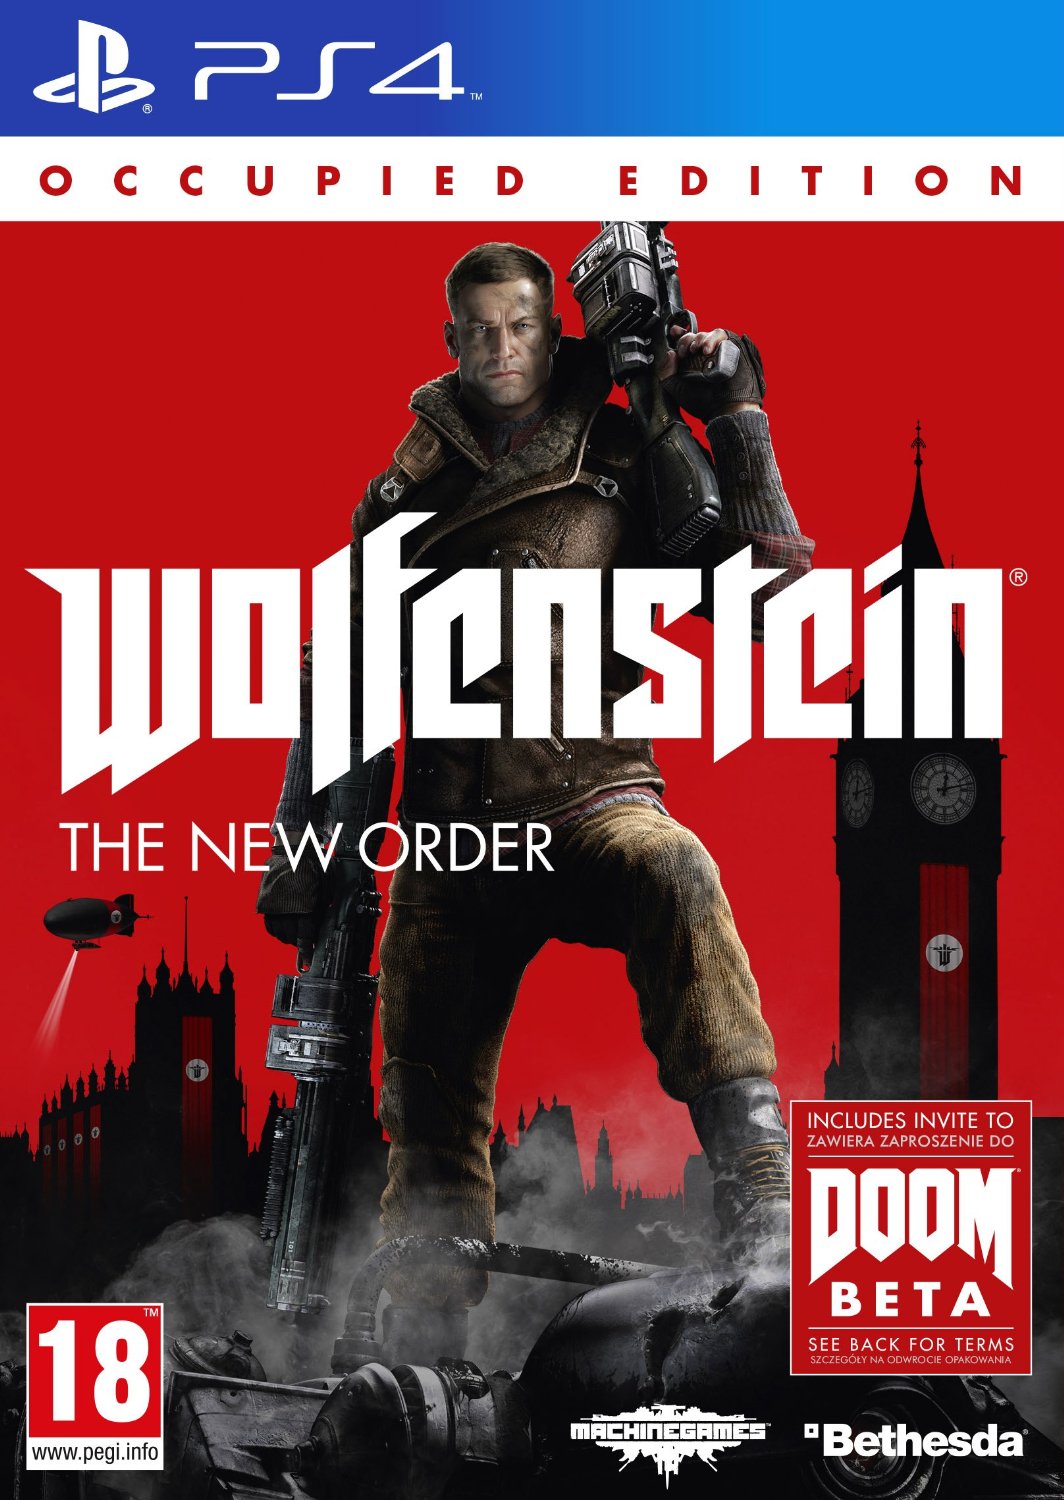 Wolfenstein The New Order Occupied Edition PS4